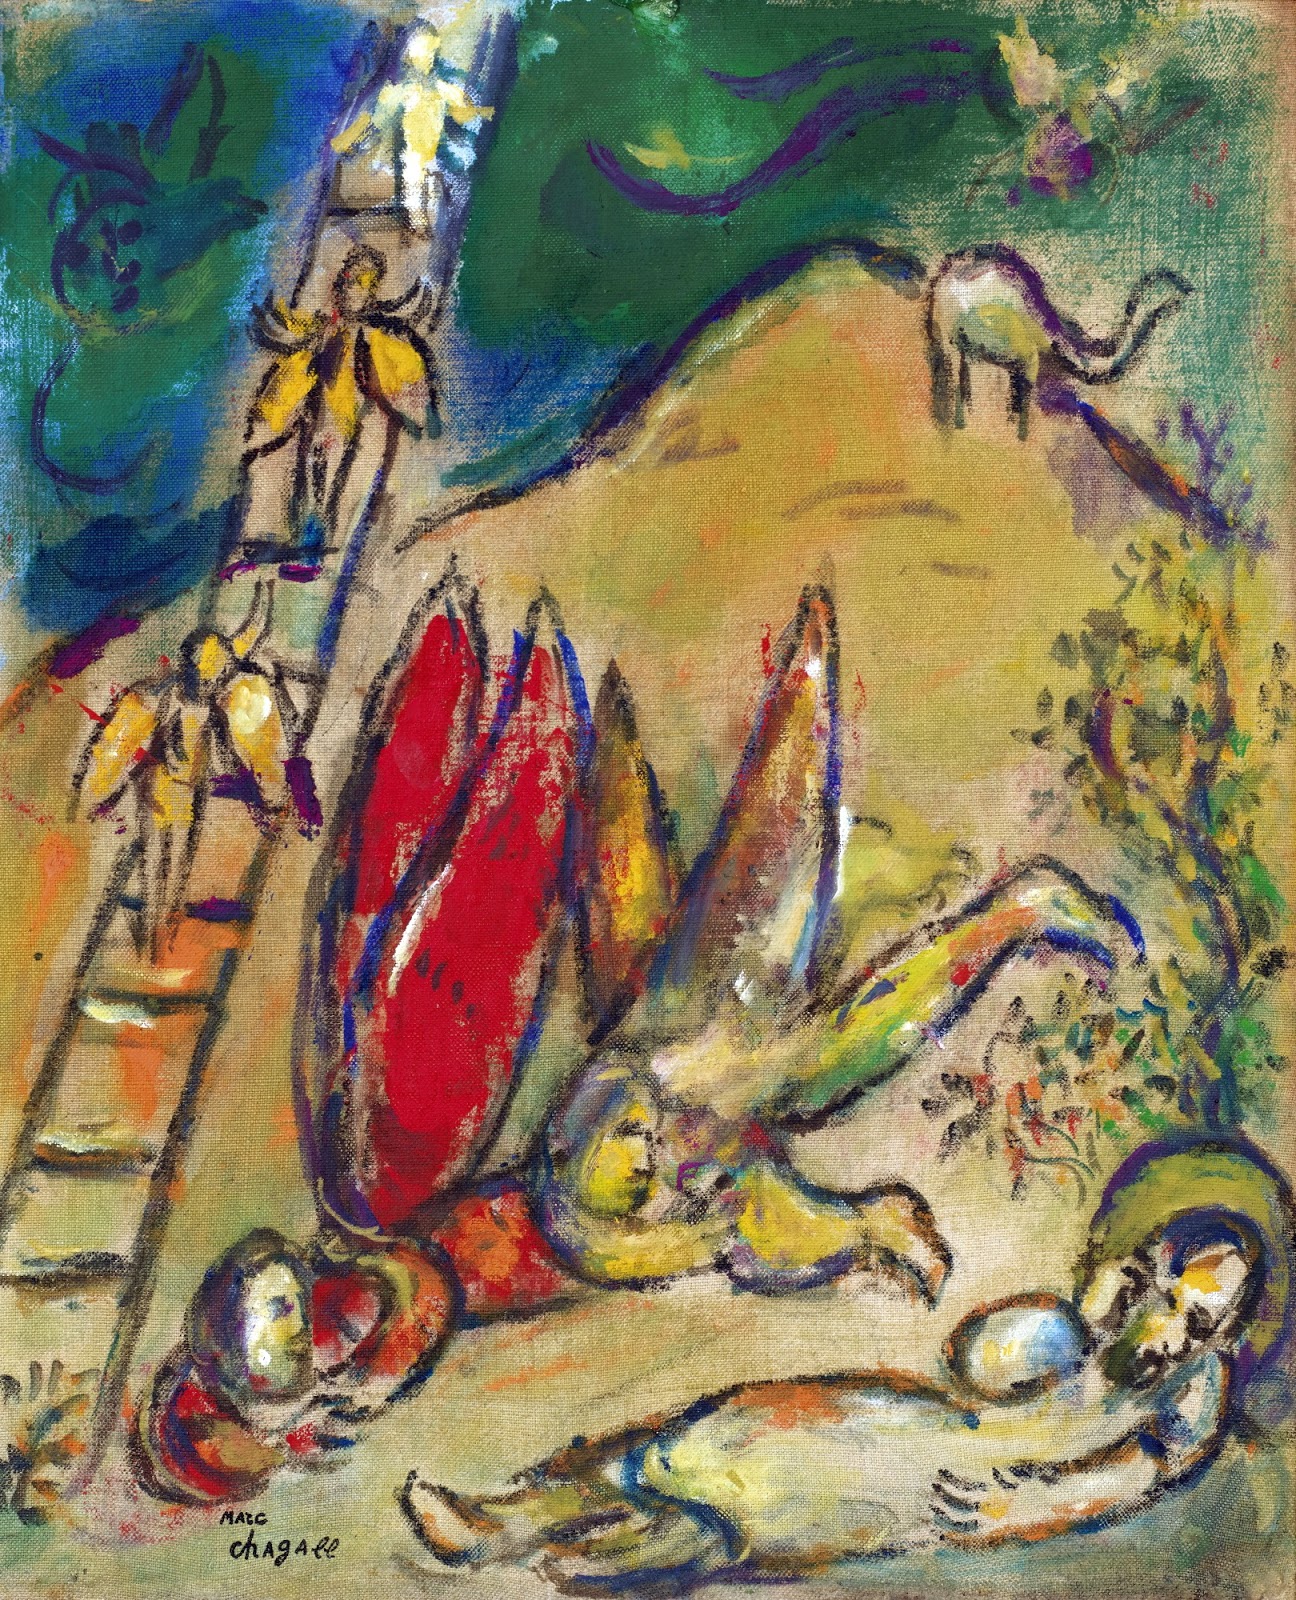 Marc+Chagall-1887-1985 (264).jpg